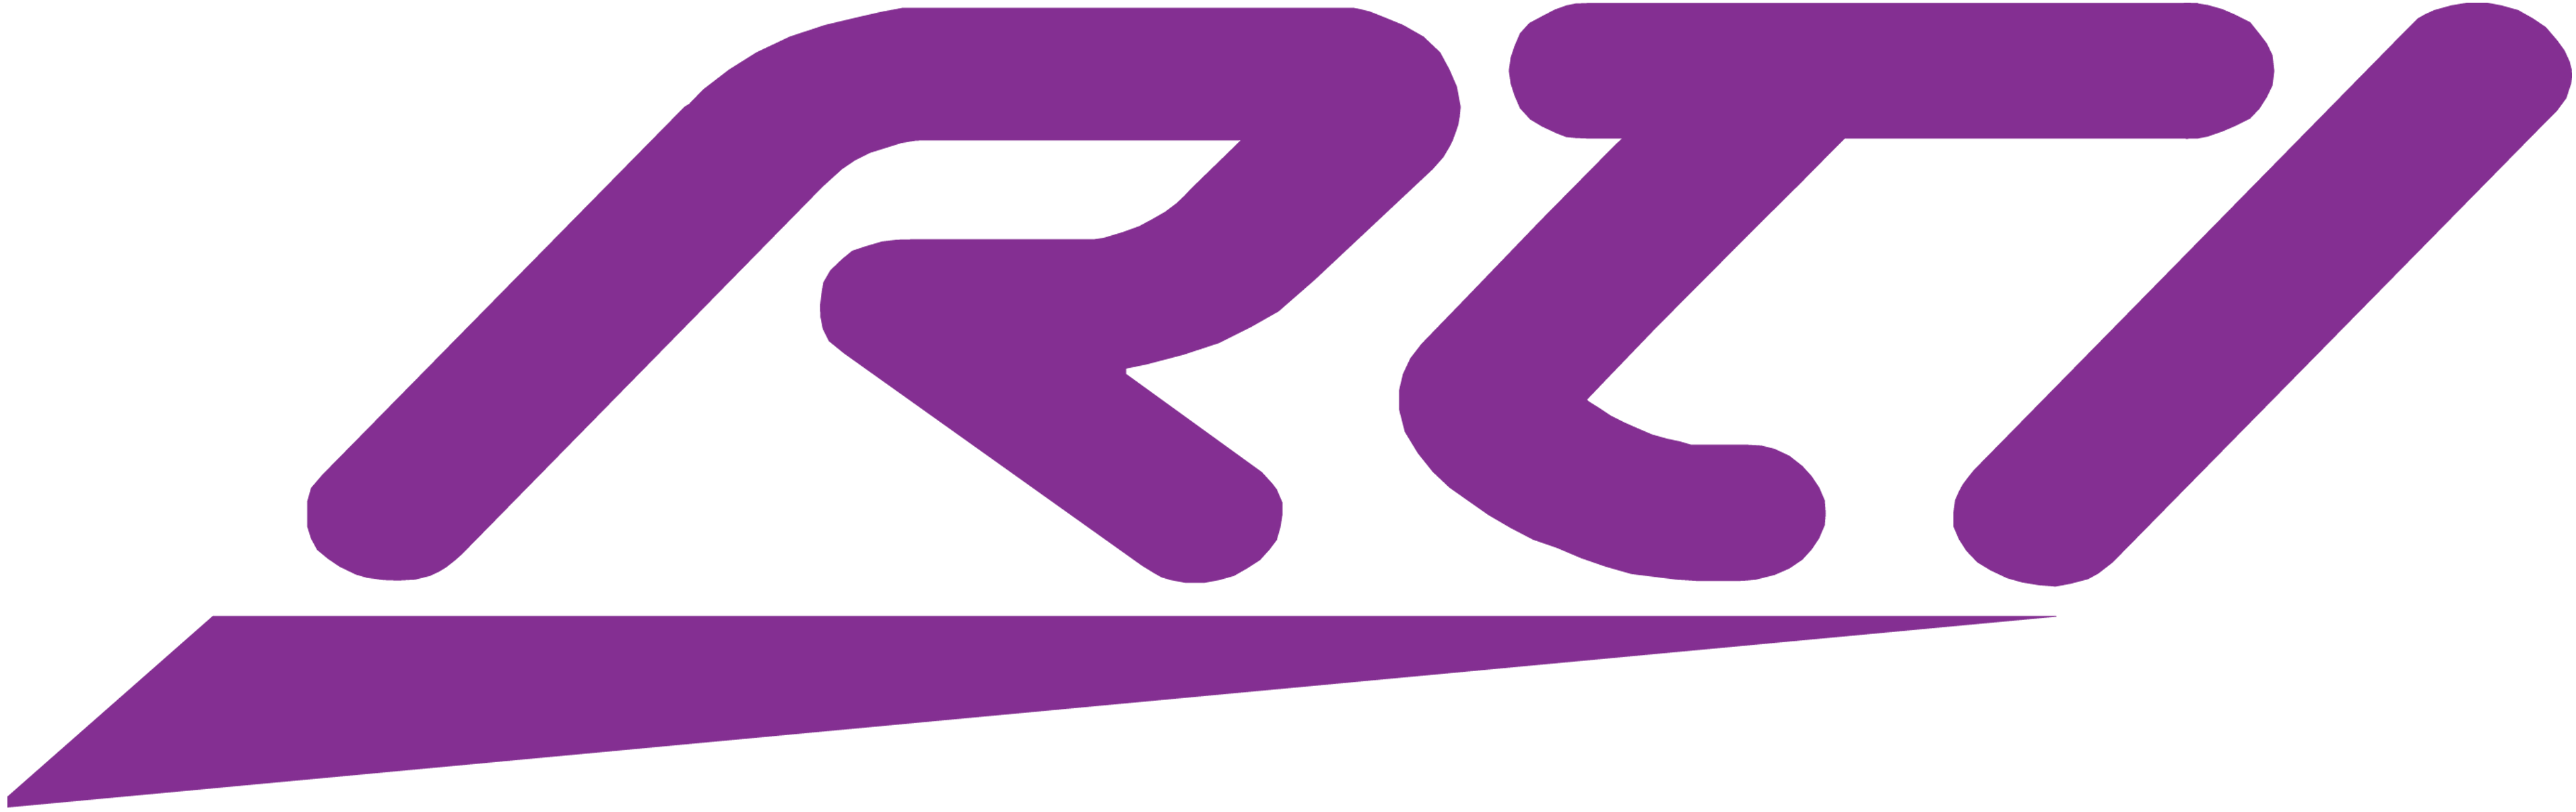 logo_company_products_rti1